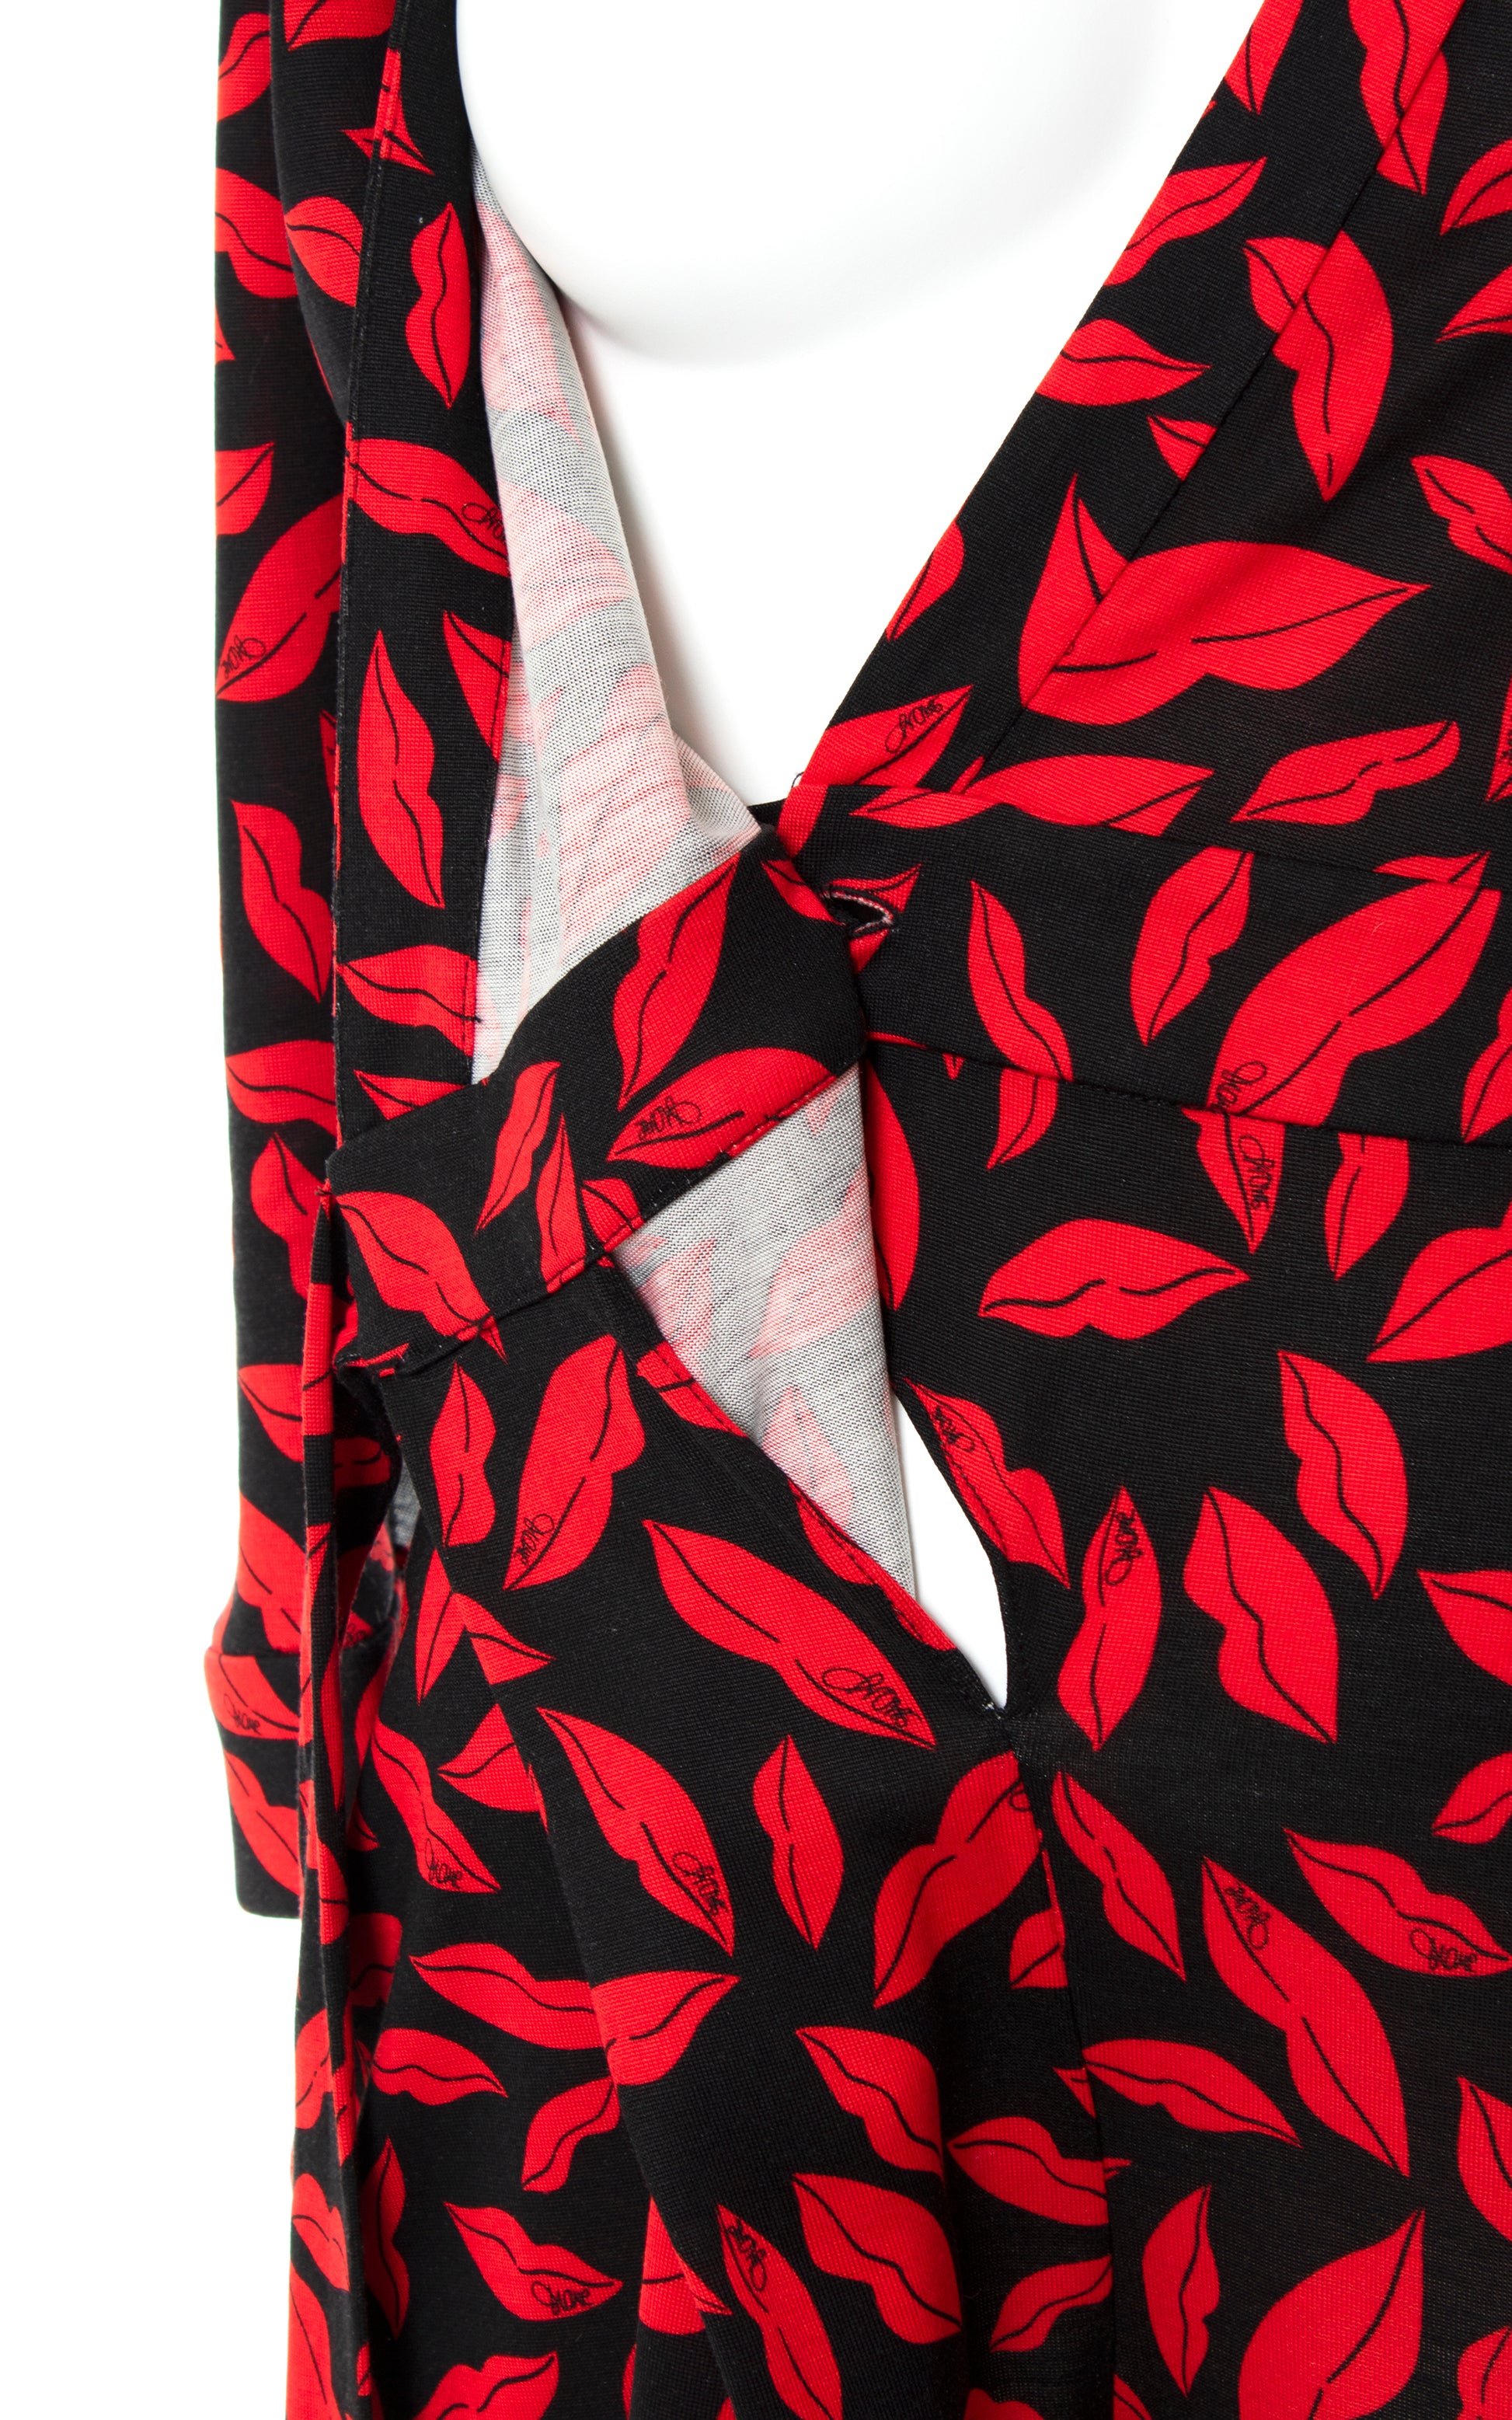 DIANE VON FURSTENBERG Silk Jersey Red Lips Novelty Print Black Shorts Wrap Romper | x-small/small | Birthday Life Vintage